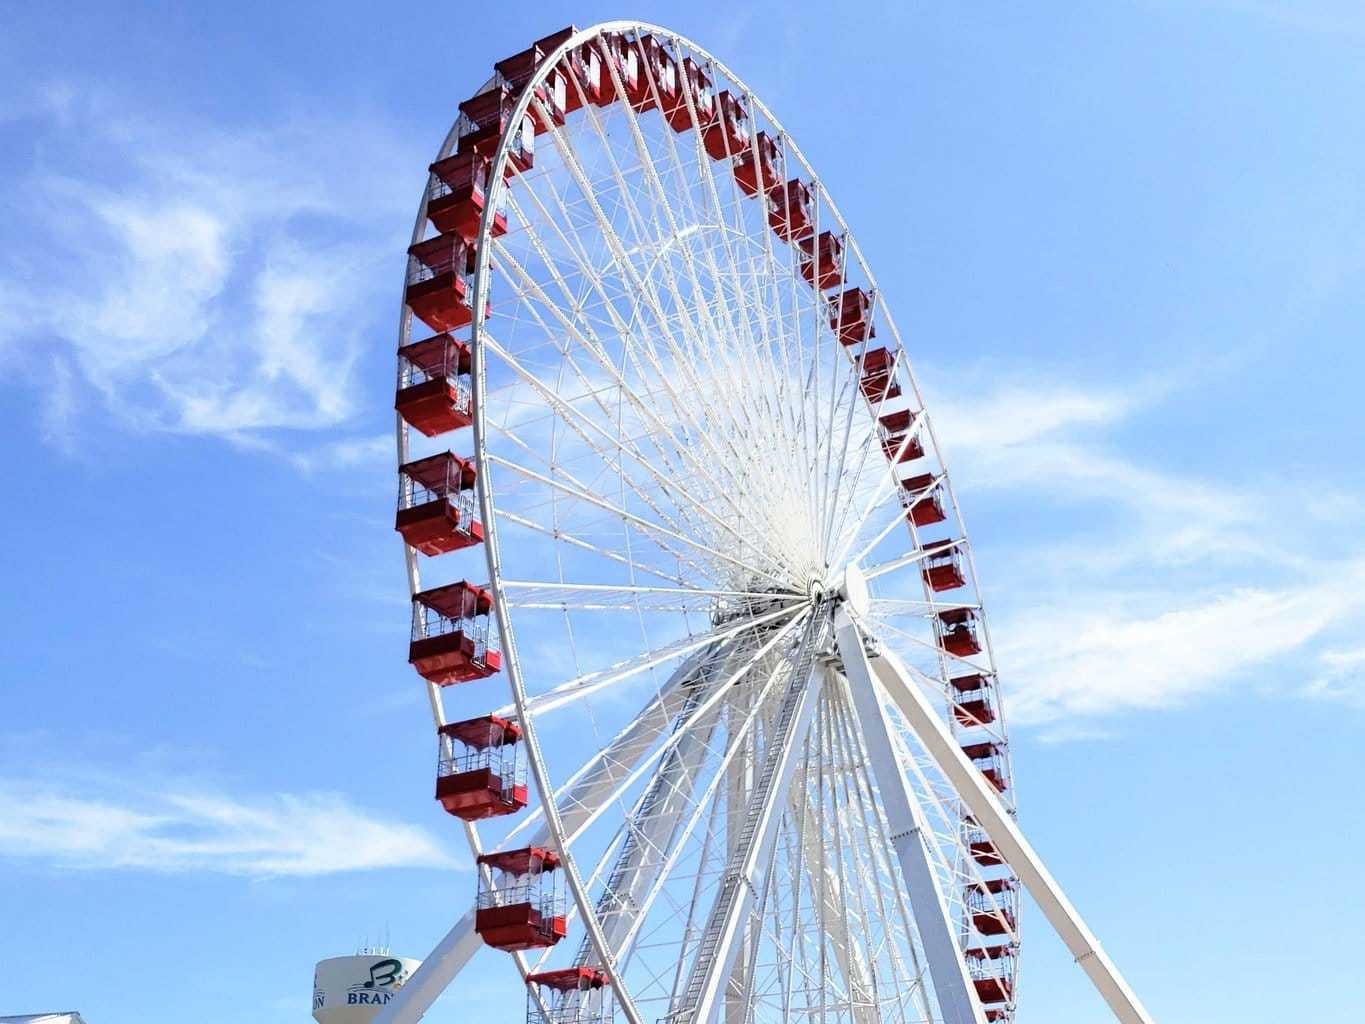 The Track Family Fun Park & Branson Ferris Wheel - Fun for ... - 1365 x 1024 jpeg 196kB